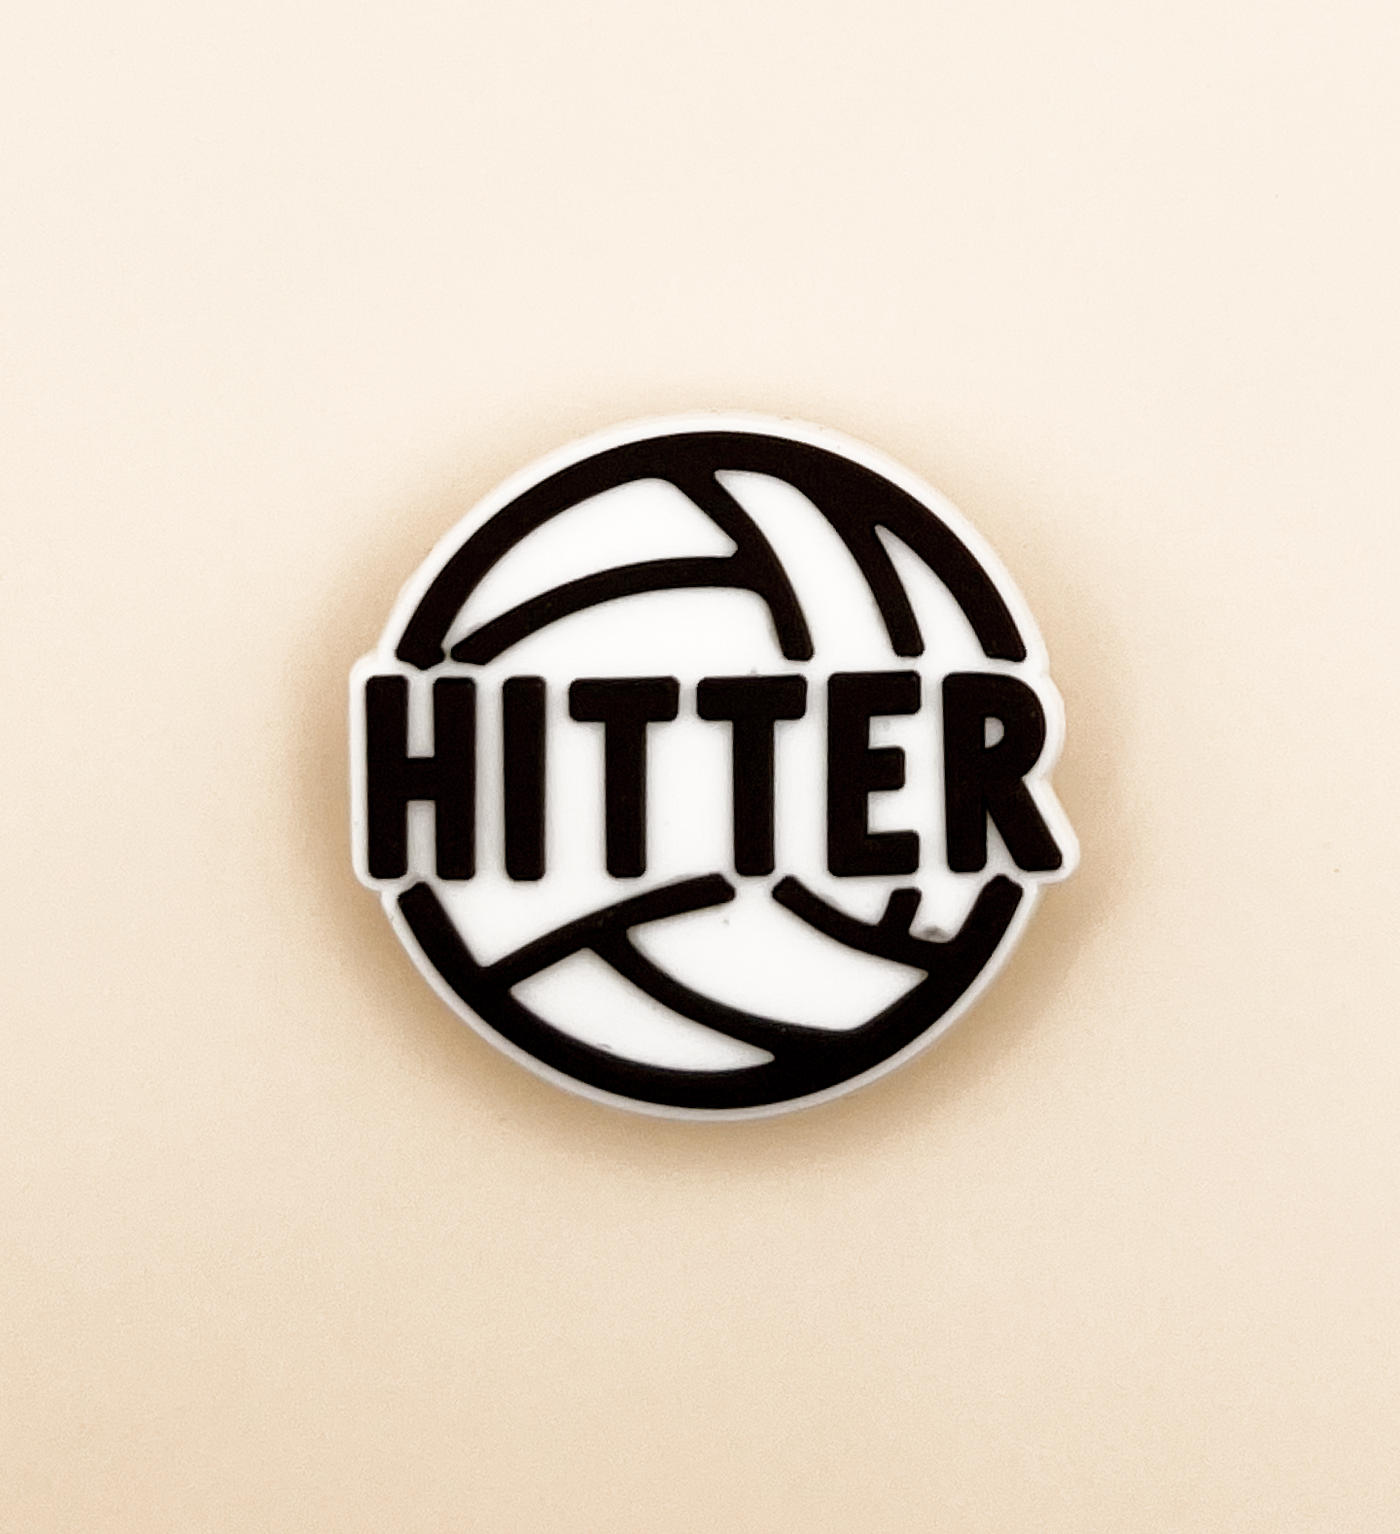 Hitter - Volleyball Shoe Croc Charm